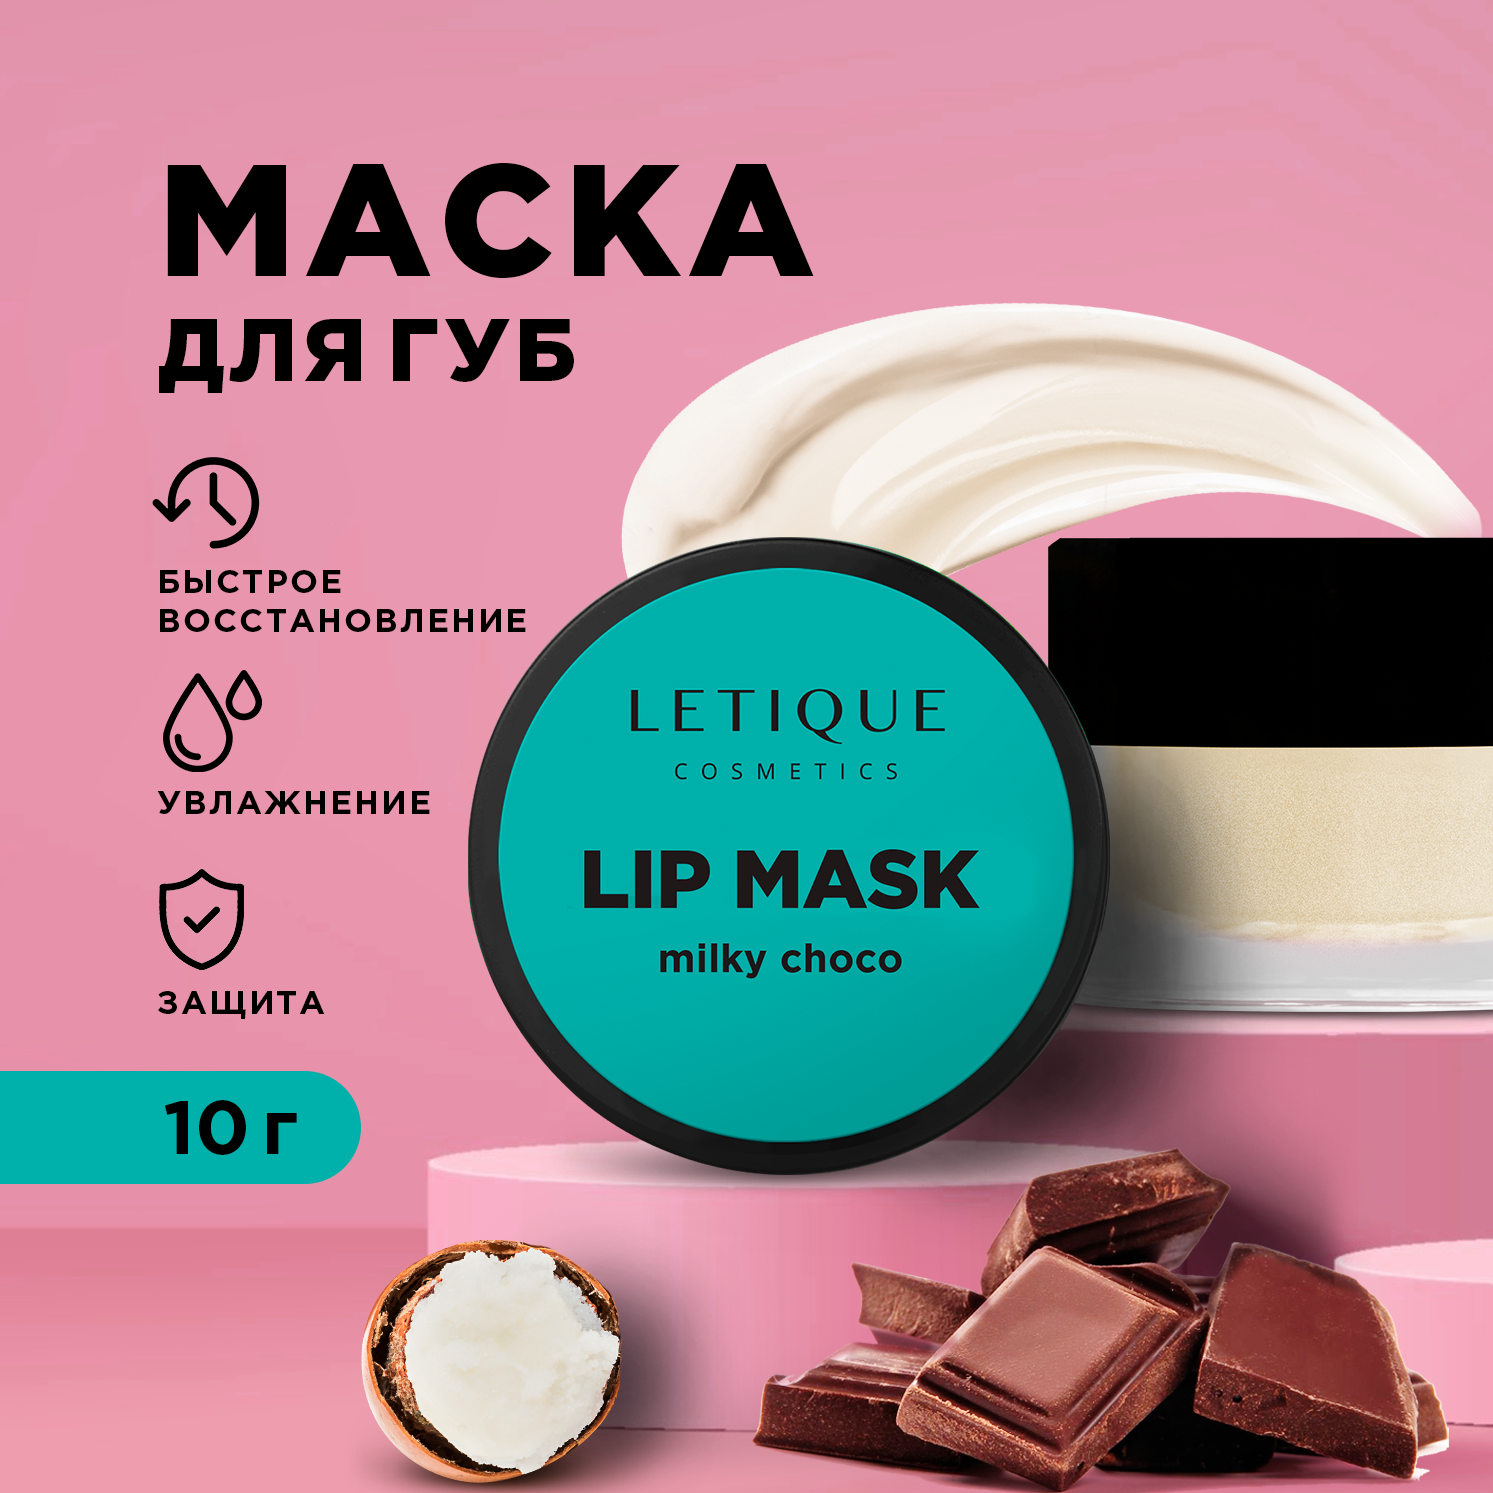 Маска для губ Letique Cosmetics Lip Mask Milky Choco 10 г letique cosmetics крем баттер для тела барбадосская вишня 200 0